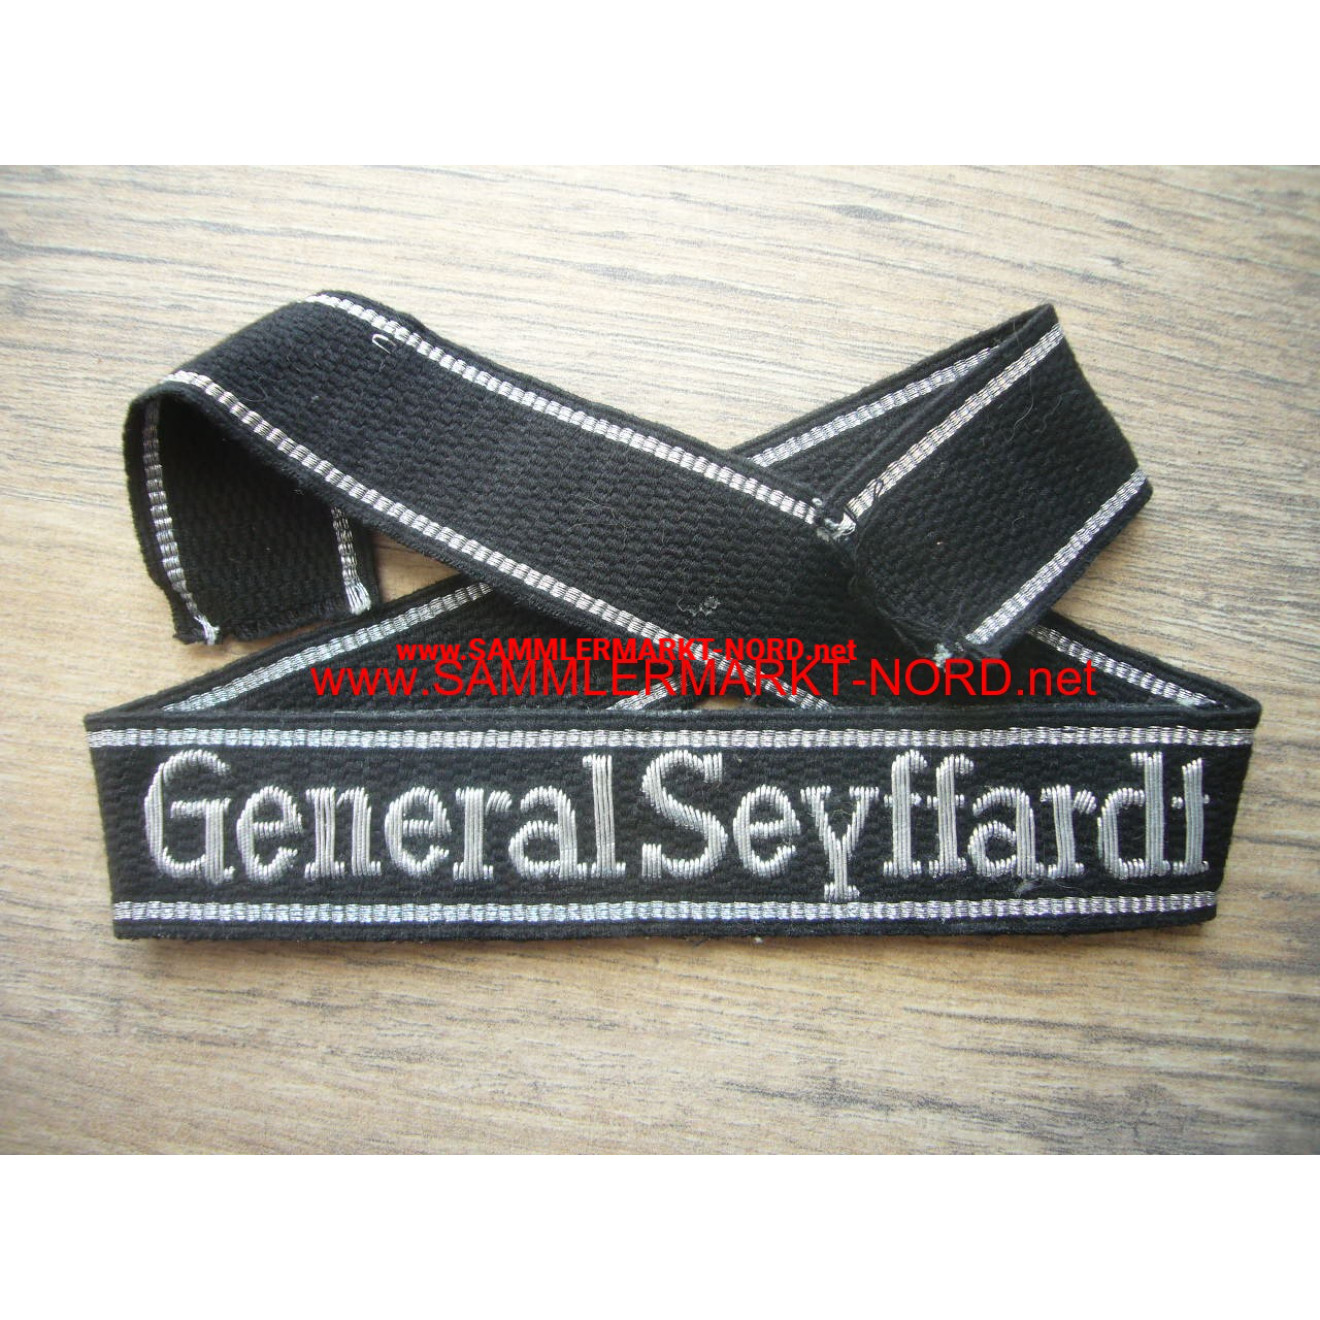 SS - cuff title "General Seyffardt"